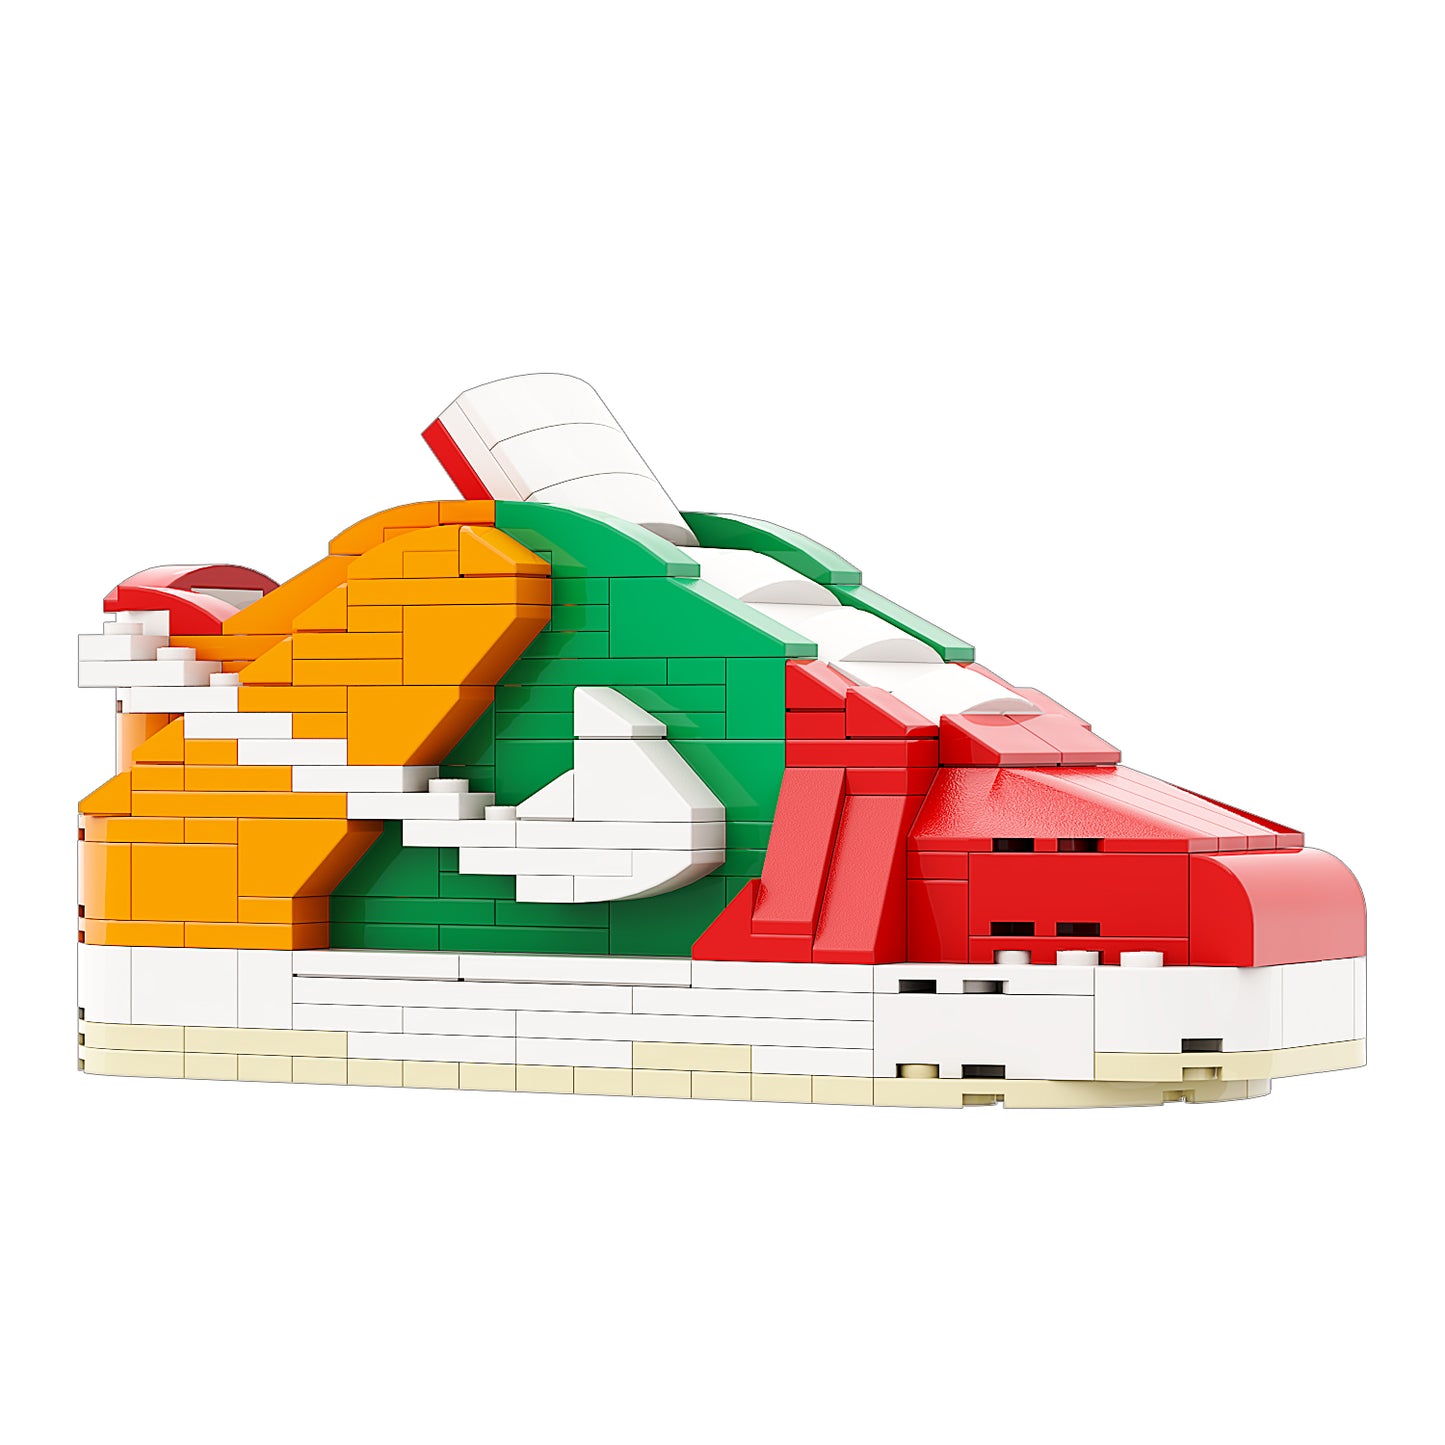 REGULAR  "SB Dunk Low 7-Eleven" Sneaker Bricks with Mini Figure